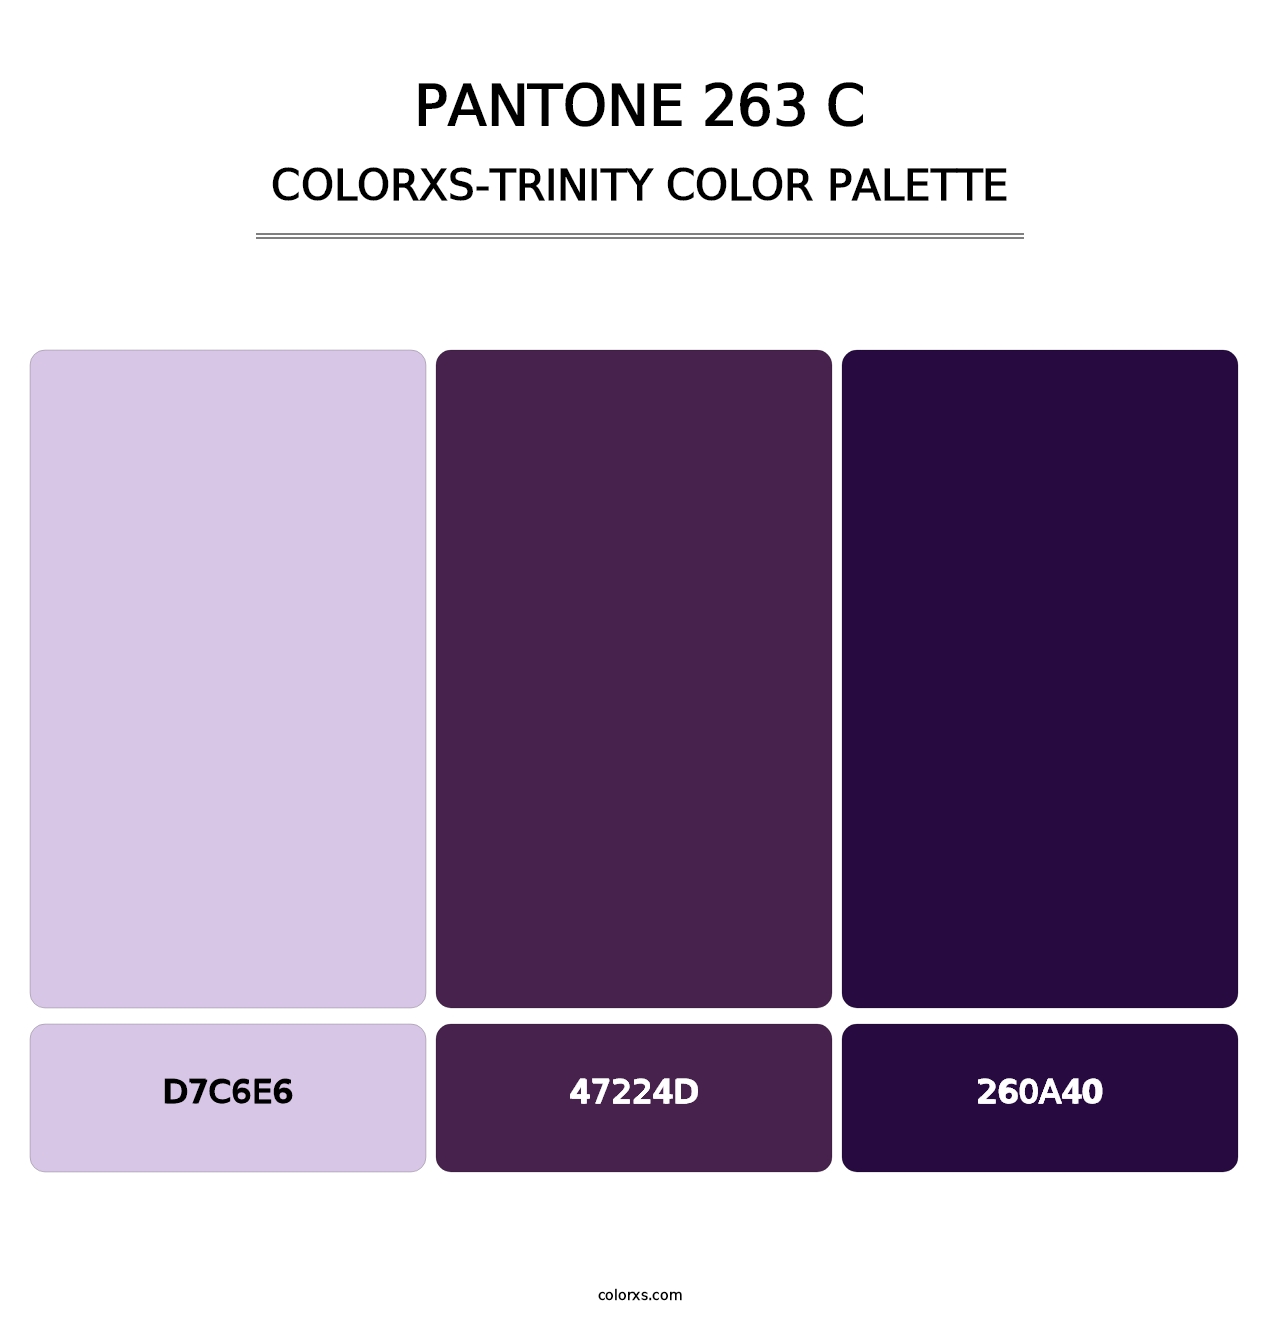 PANTONE 263 C - Colorxs Trinity Palette